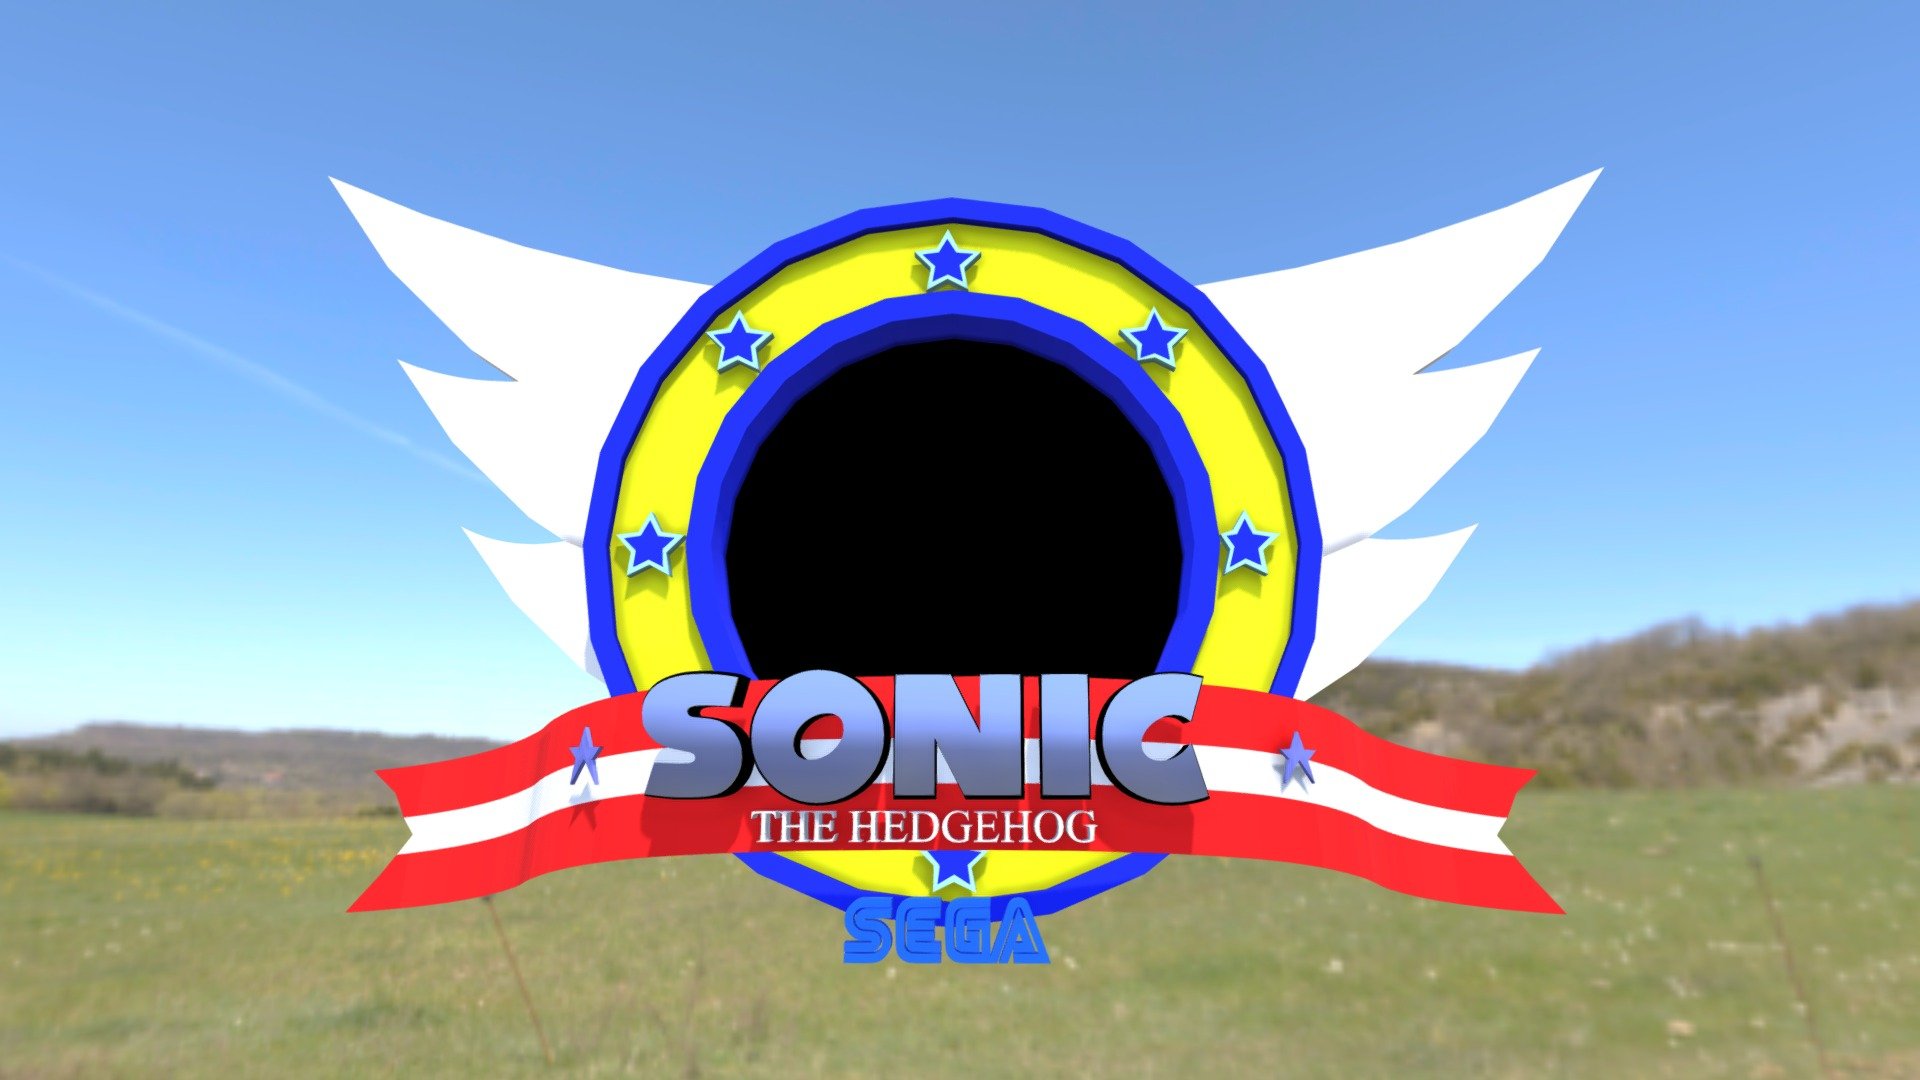 Sonic The Hedgehog - Intro logo (3D)